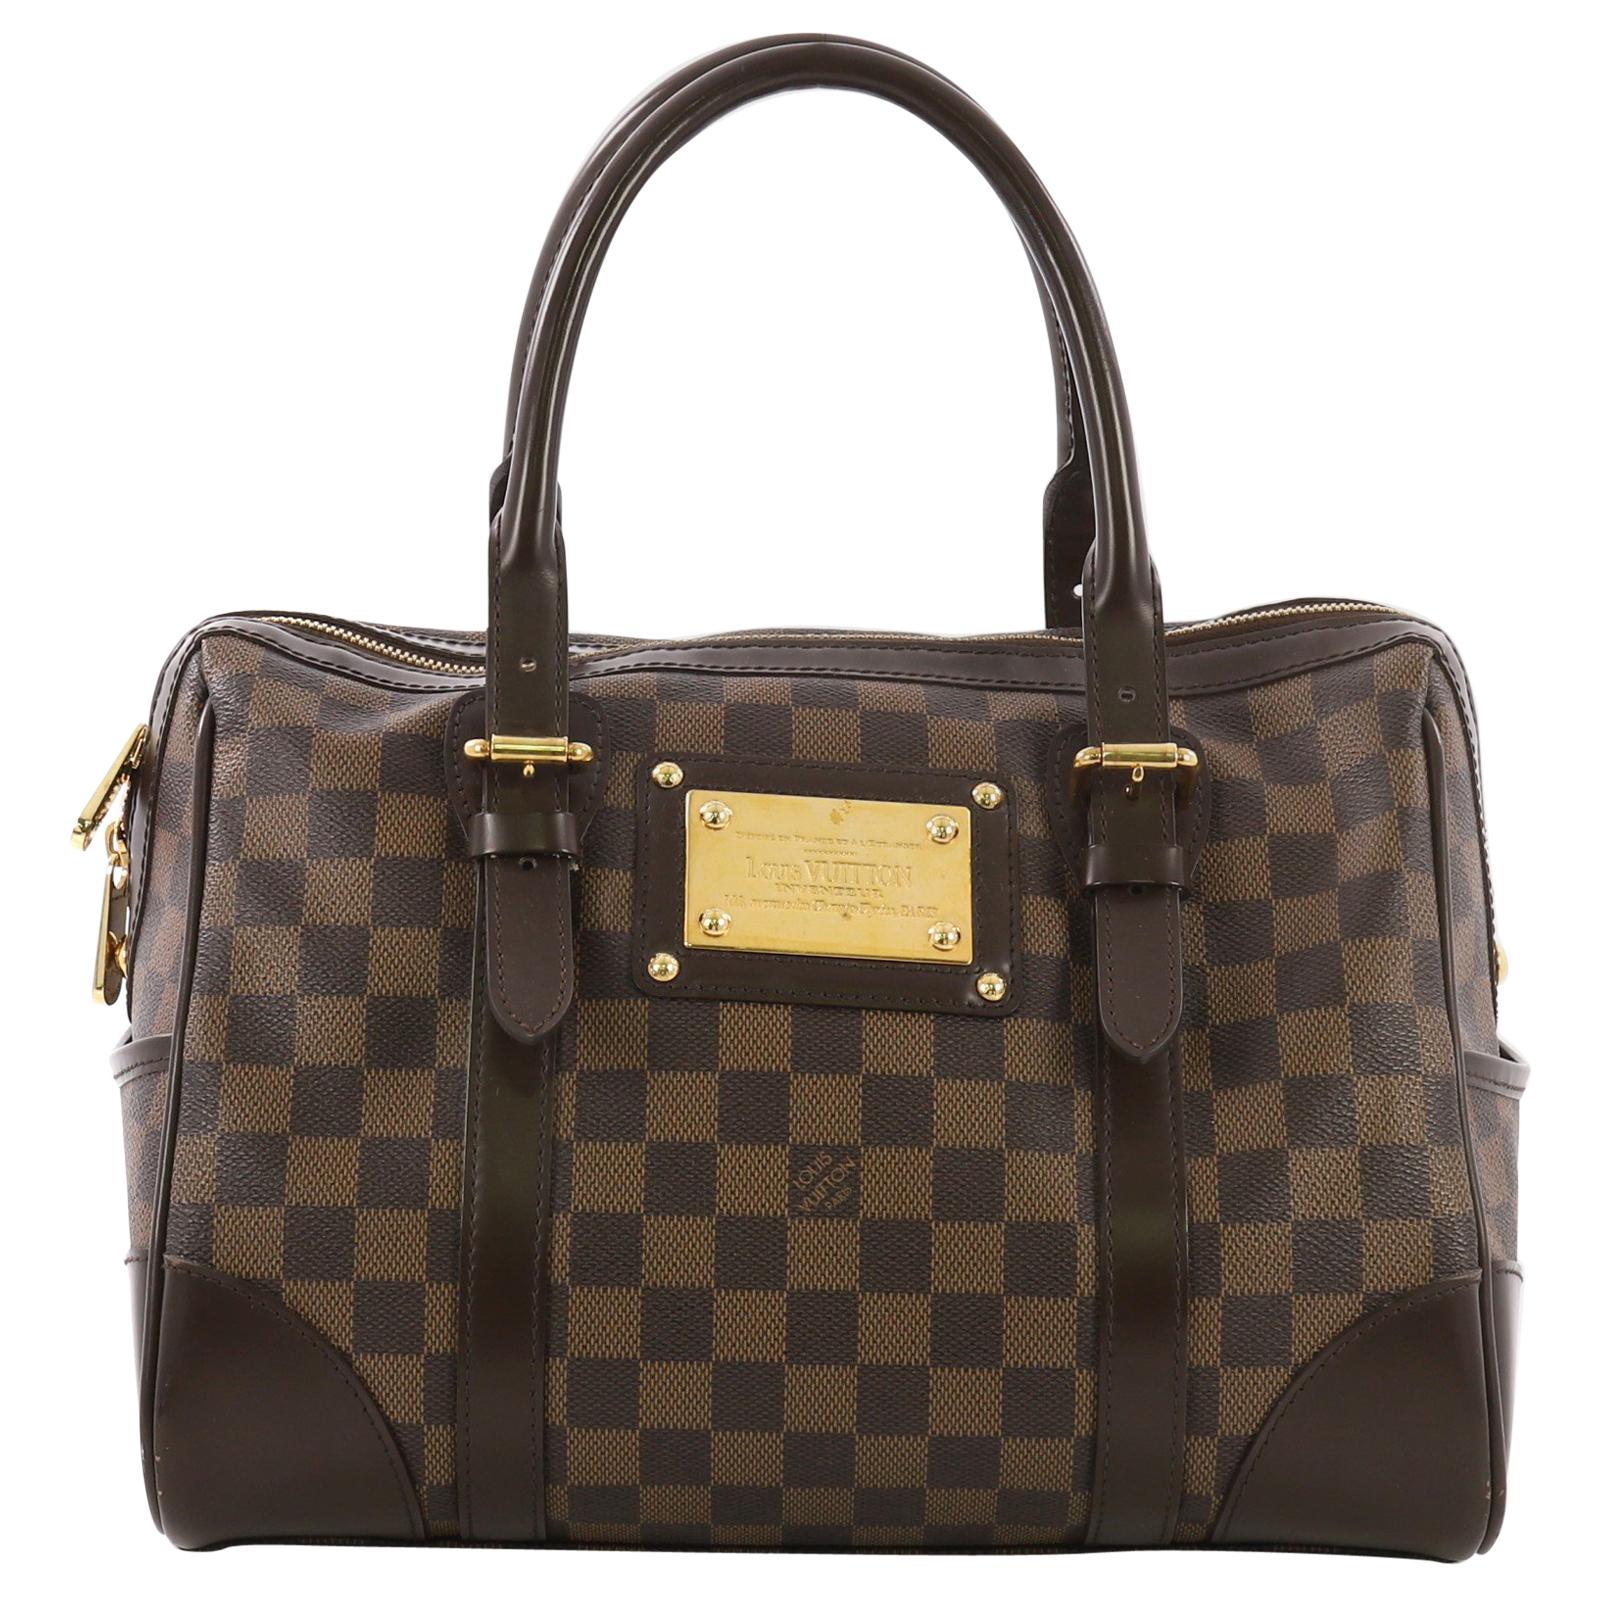 Louis Vuitton Berkeley Handbag Damier